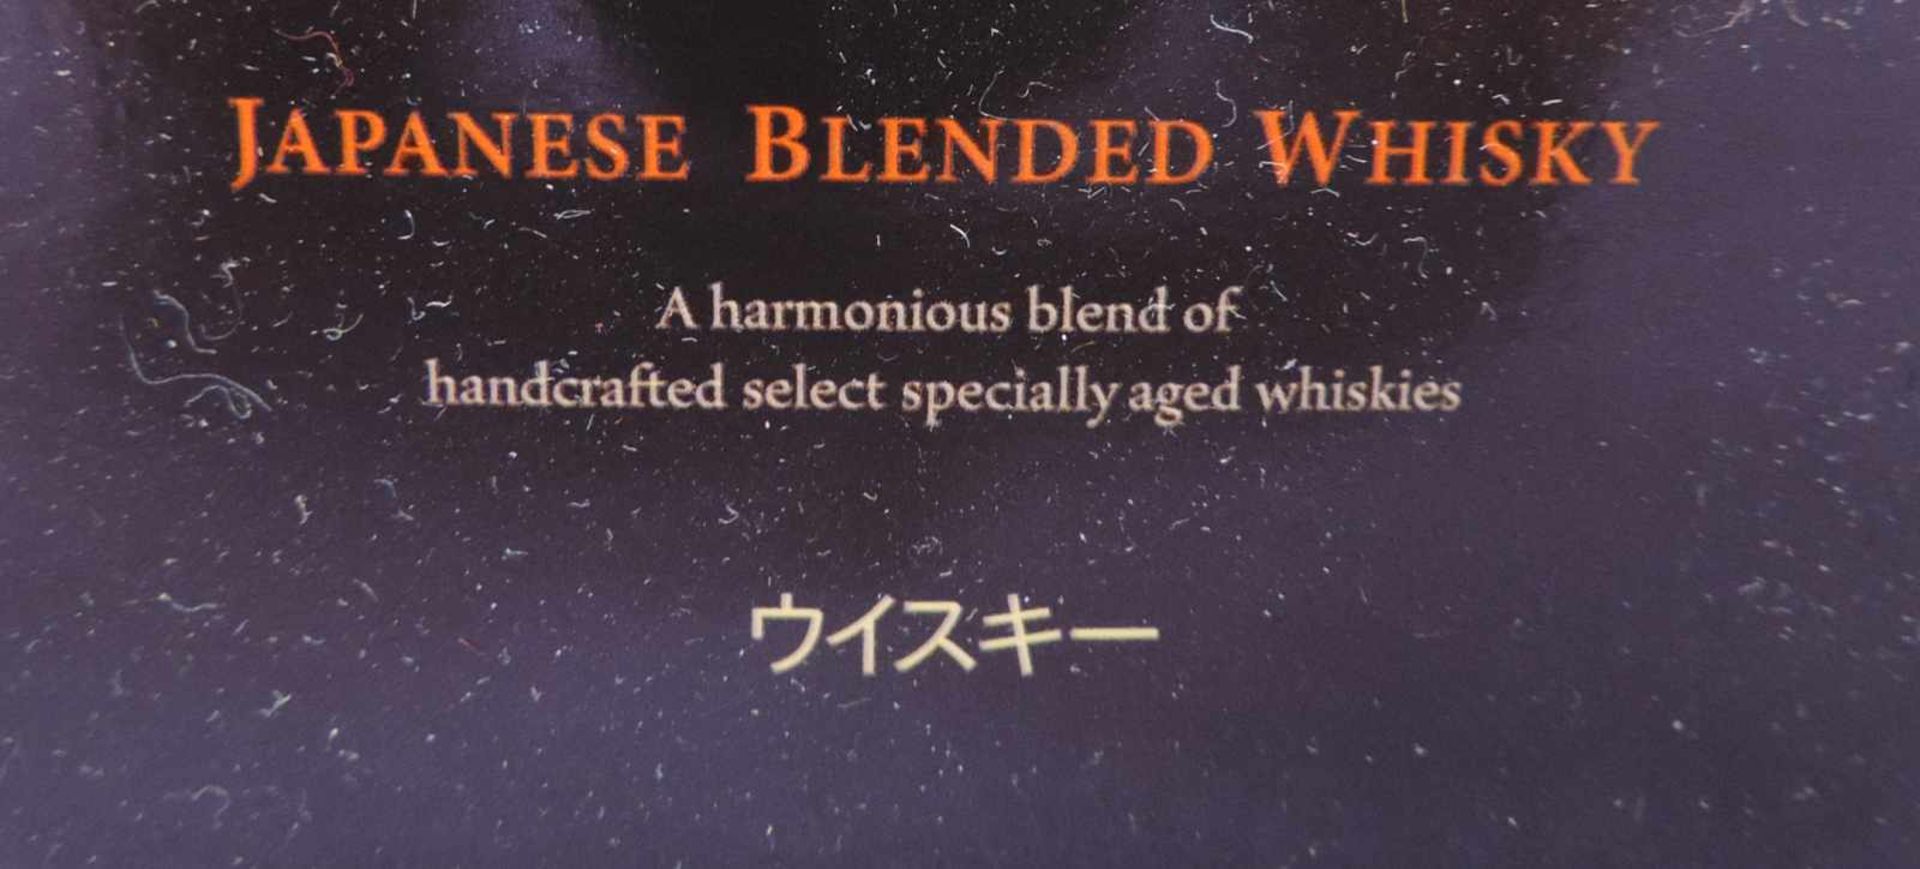 Hibiki Sutory Whiskey 12 years old. Kacho Fugetsu Special Limited Edition. Original Box. Eine - Bild 4 aus 4